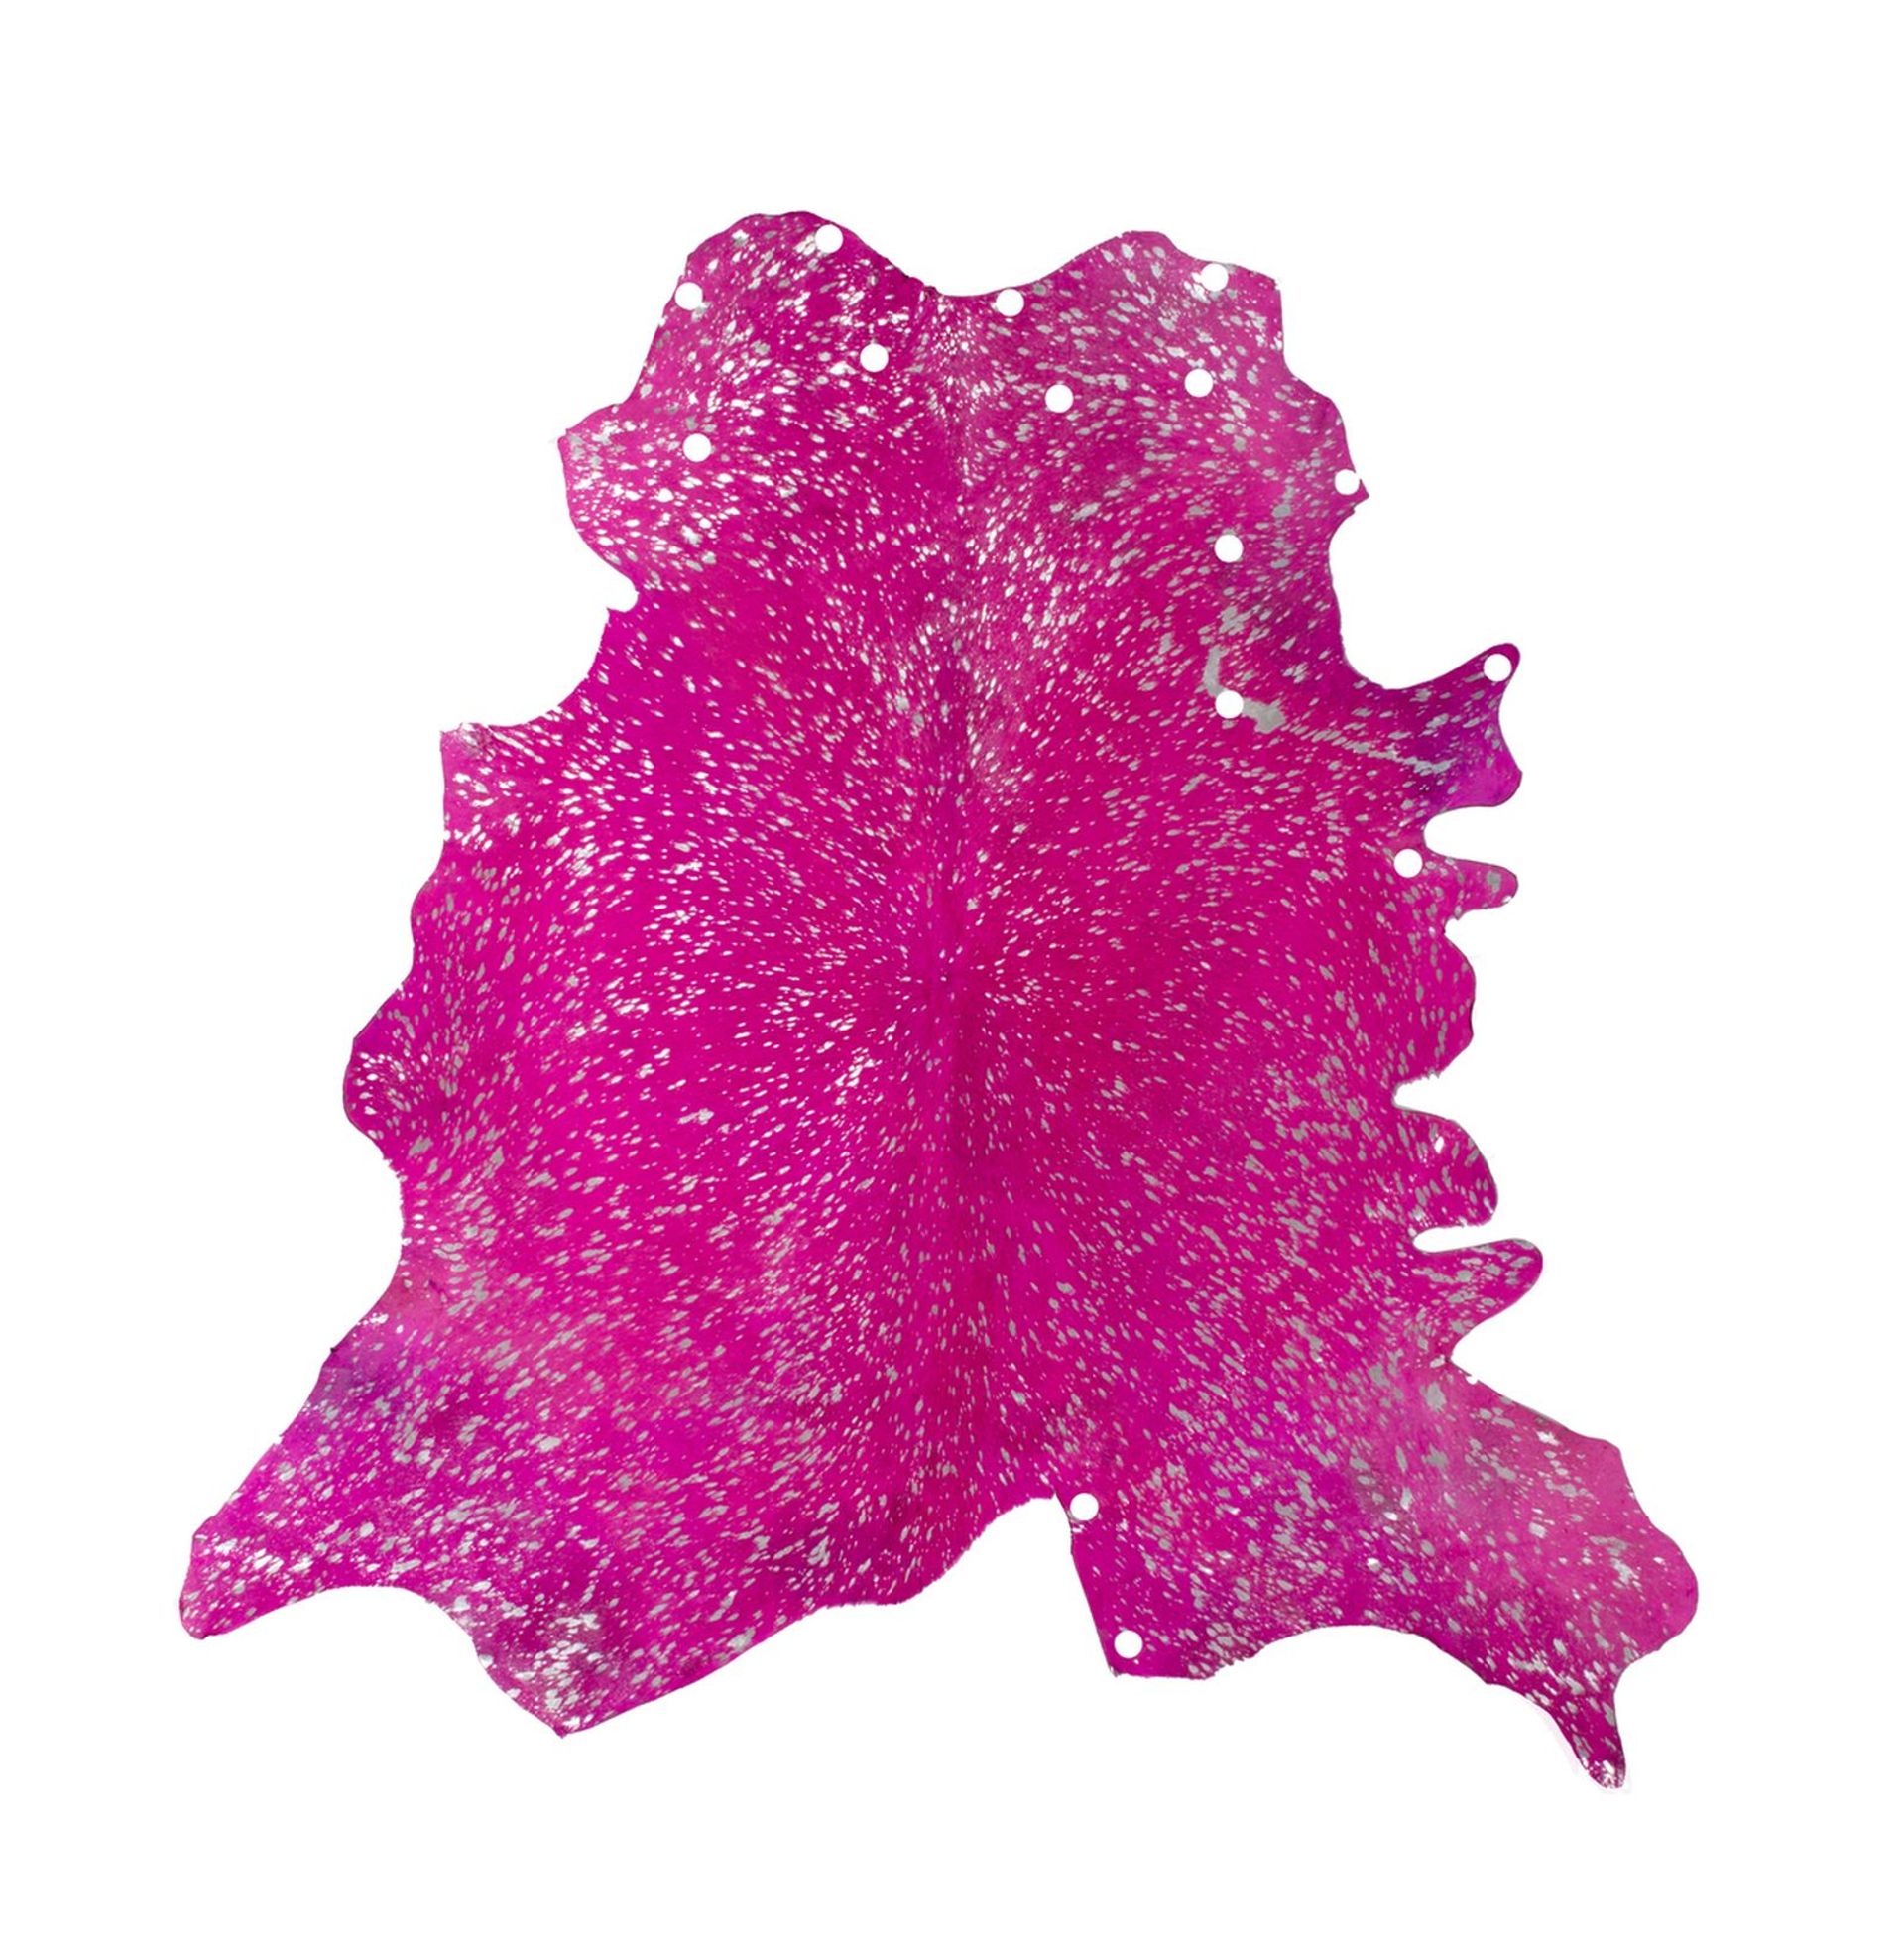 Teppich Glam 410 Violett / Silber 2,00 qm - 2,60 qm